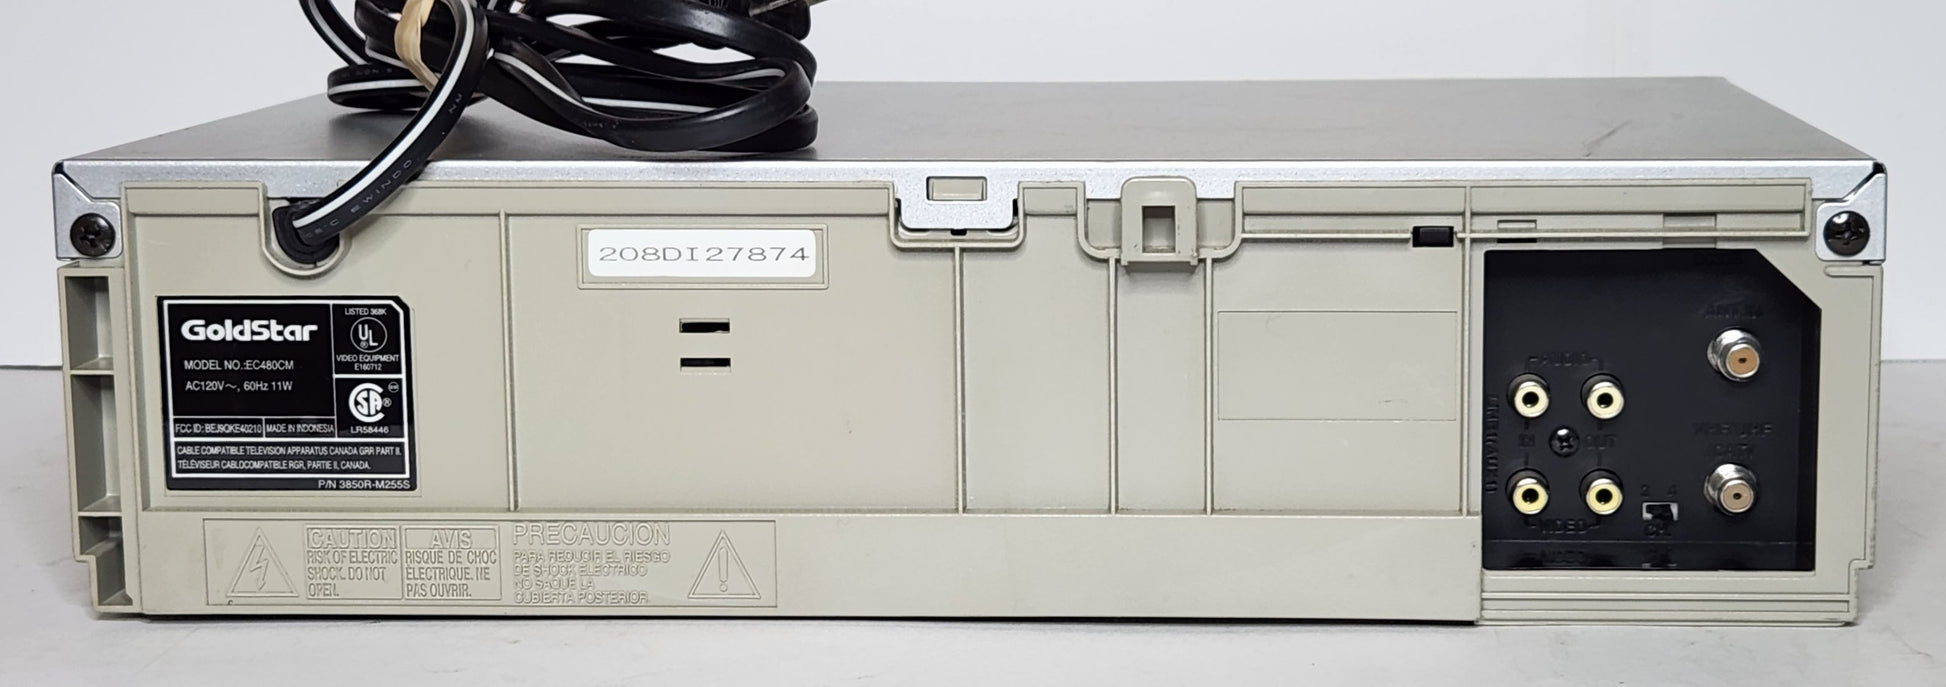 LG (GoldStar) EC480CM VCR, 4-Head Mono - Rear